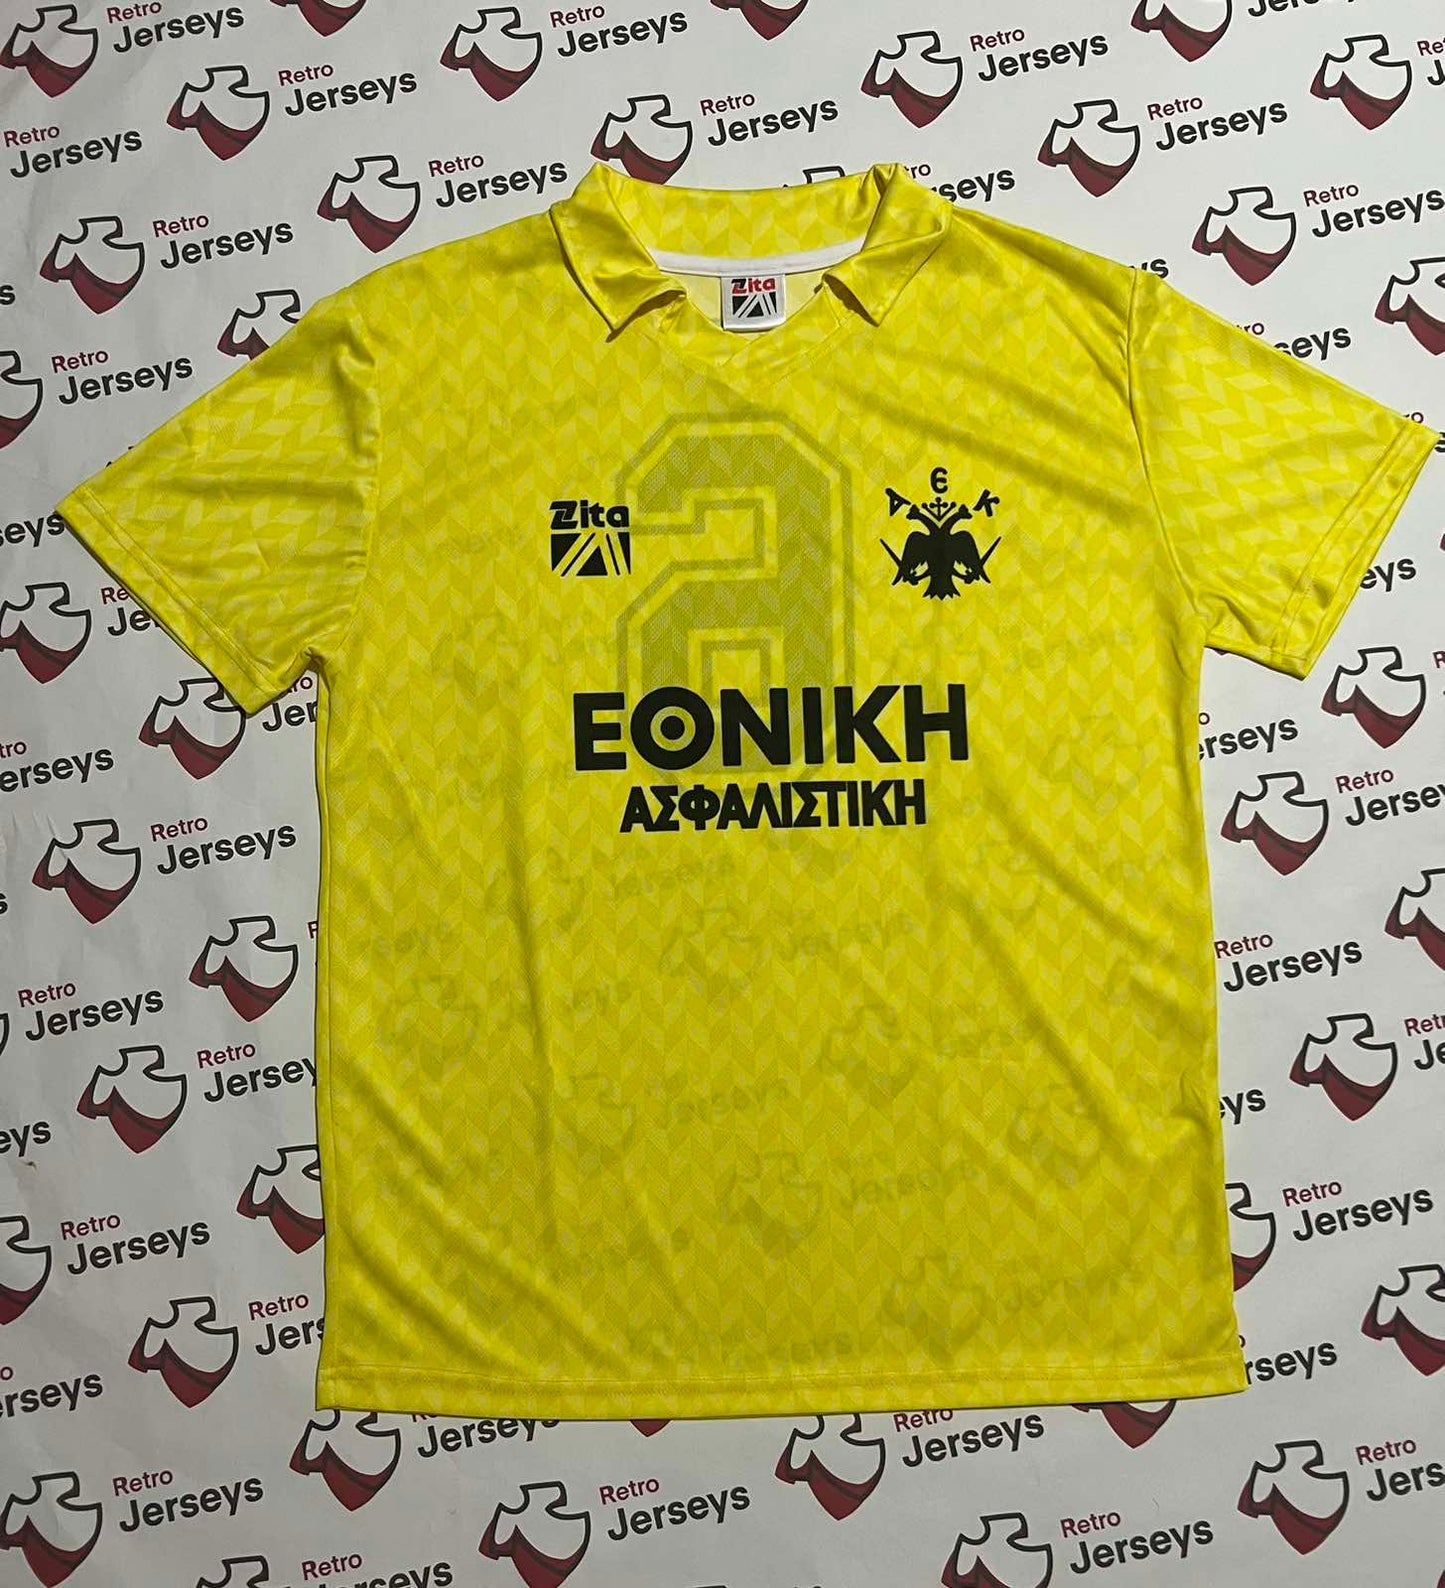 AEK Athens Shirt 1988-1989 Home - Retro Jerseys, φανέλα αεκ